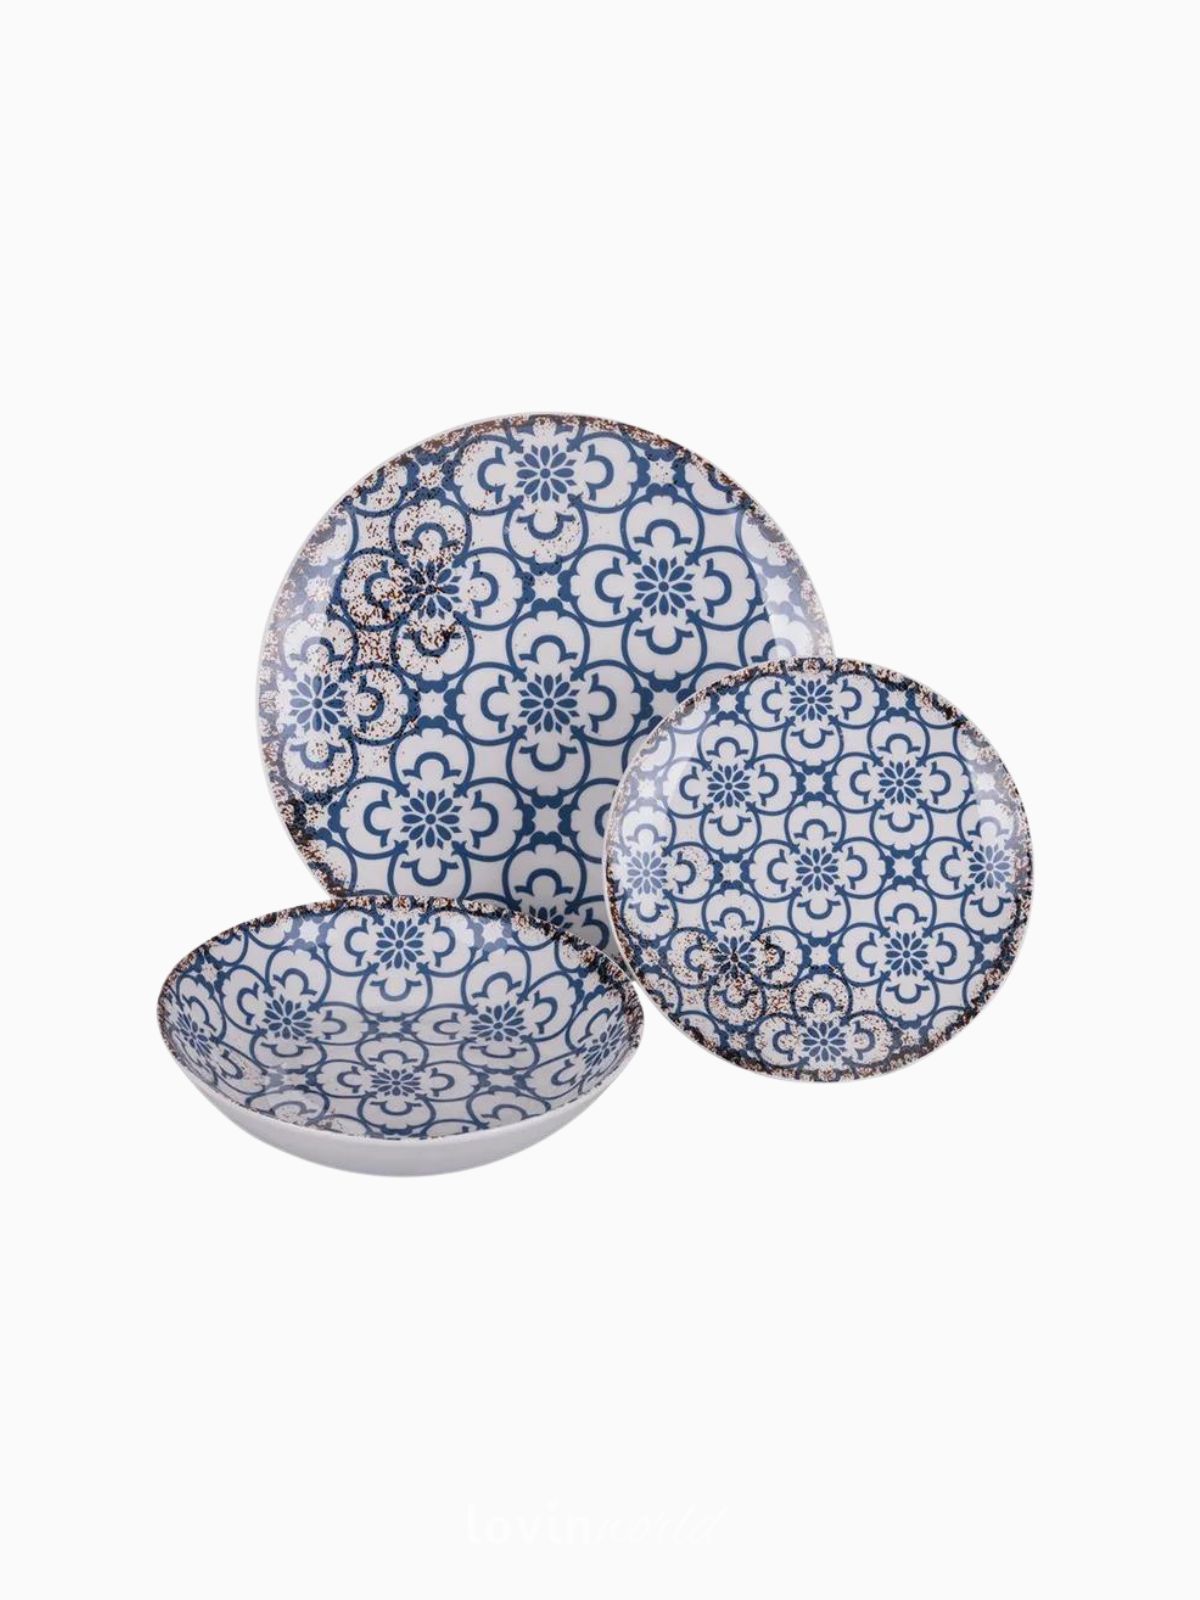 Servizio piatti 18 pz. Kasbah in porcellana, colore blu-2